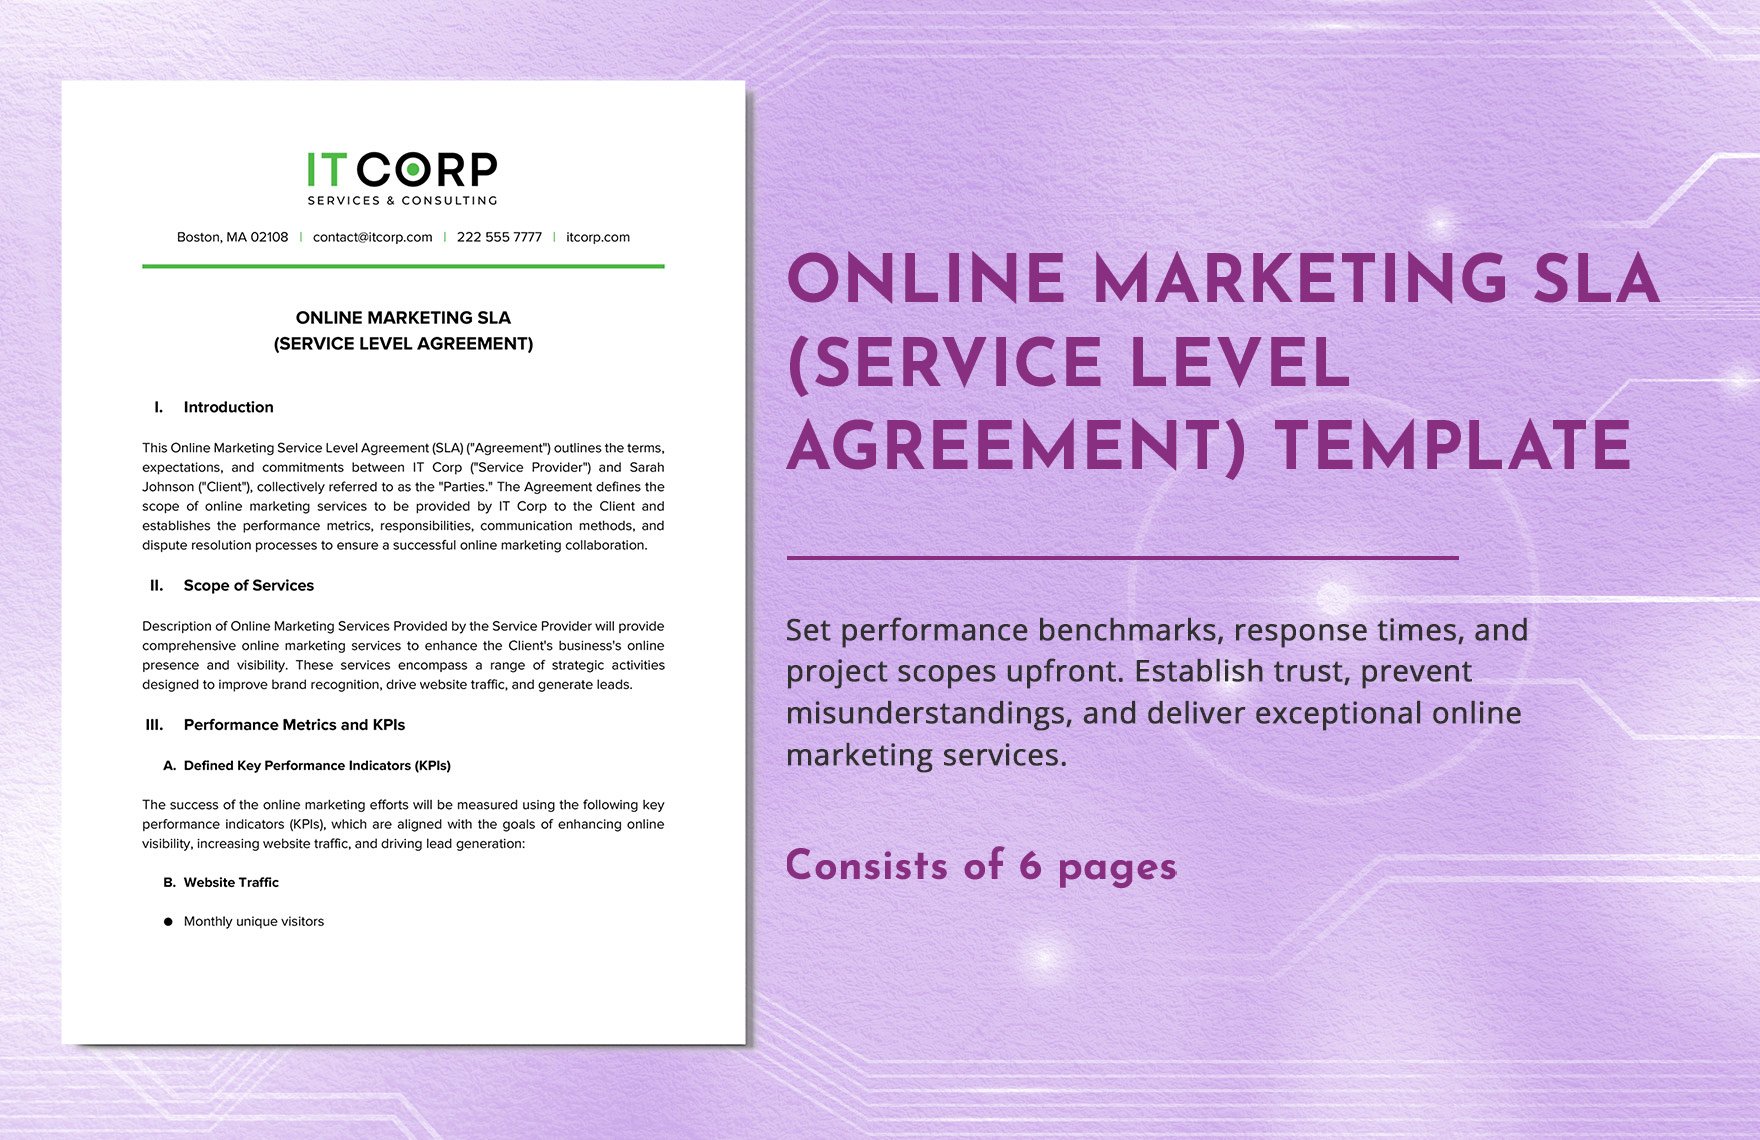 Online Marketing SLA (Service Level Agreement) Template